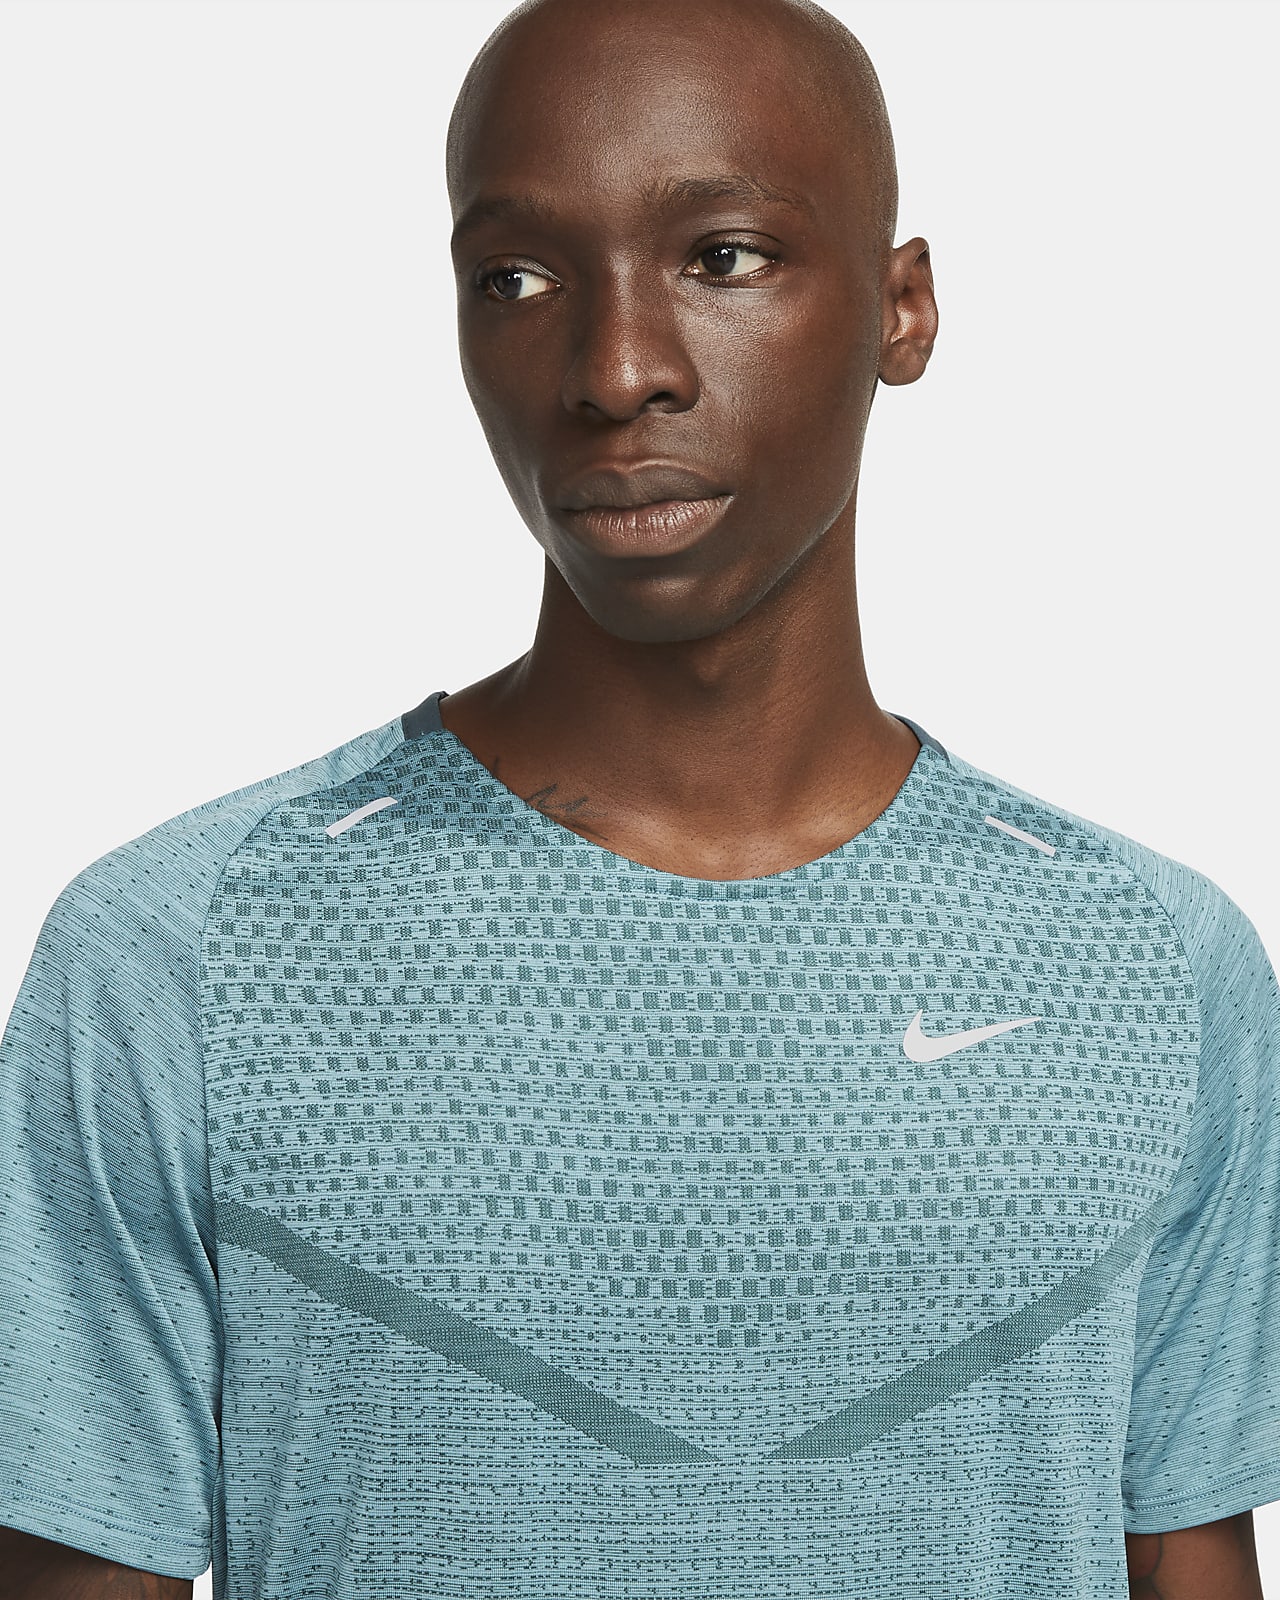 Nike ADV TechKnit Ultra Men's Short-Sleeve Top.